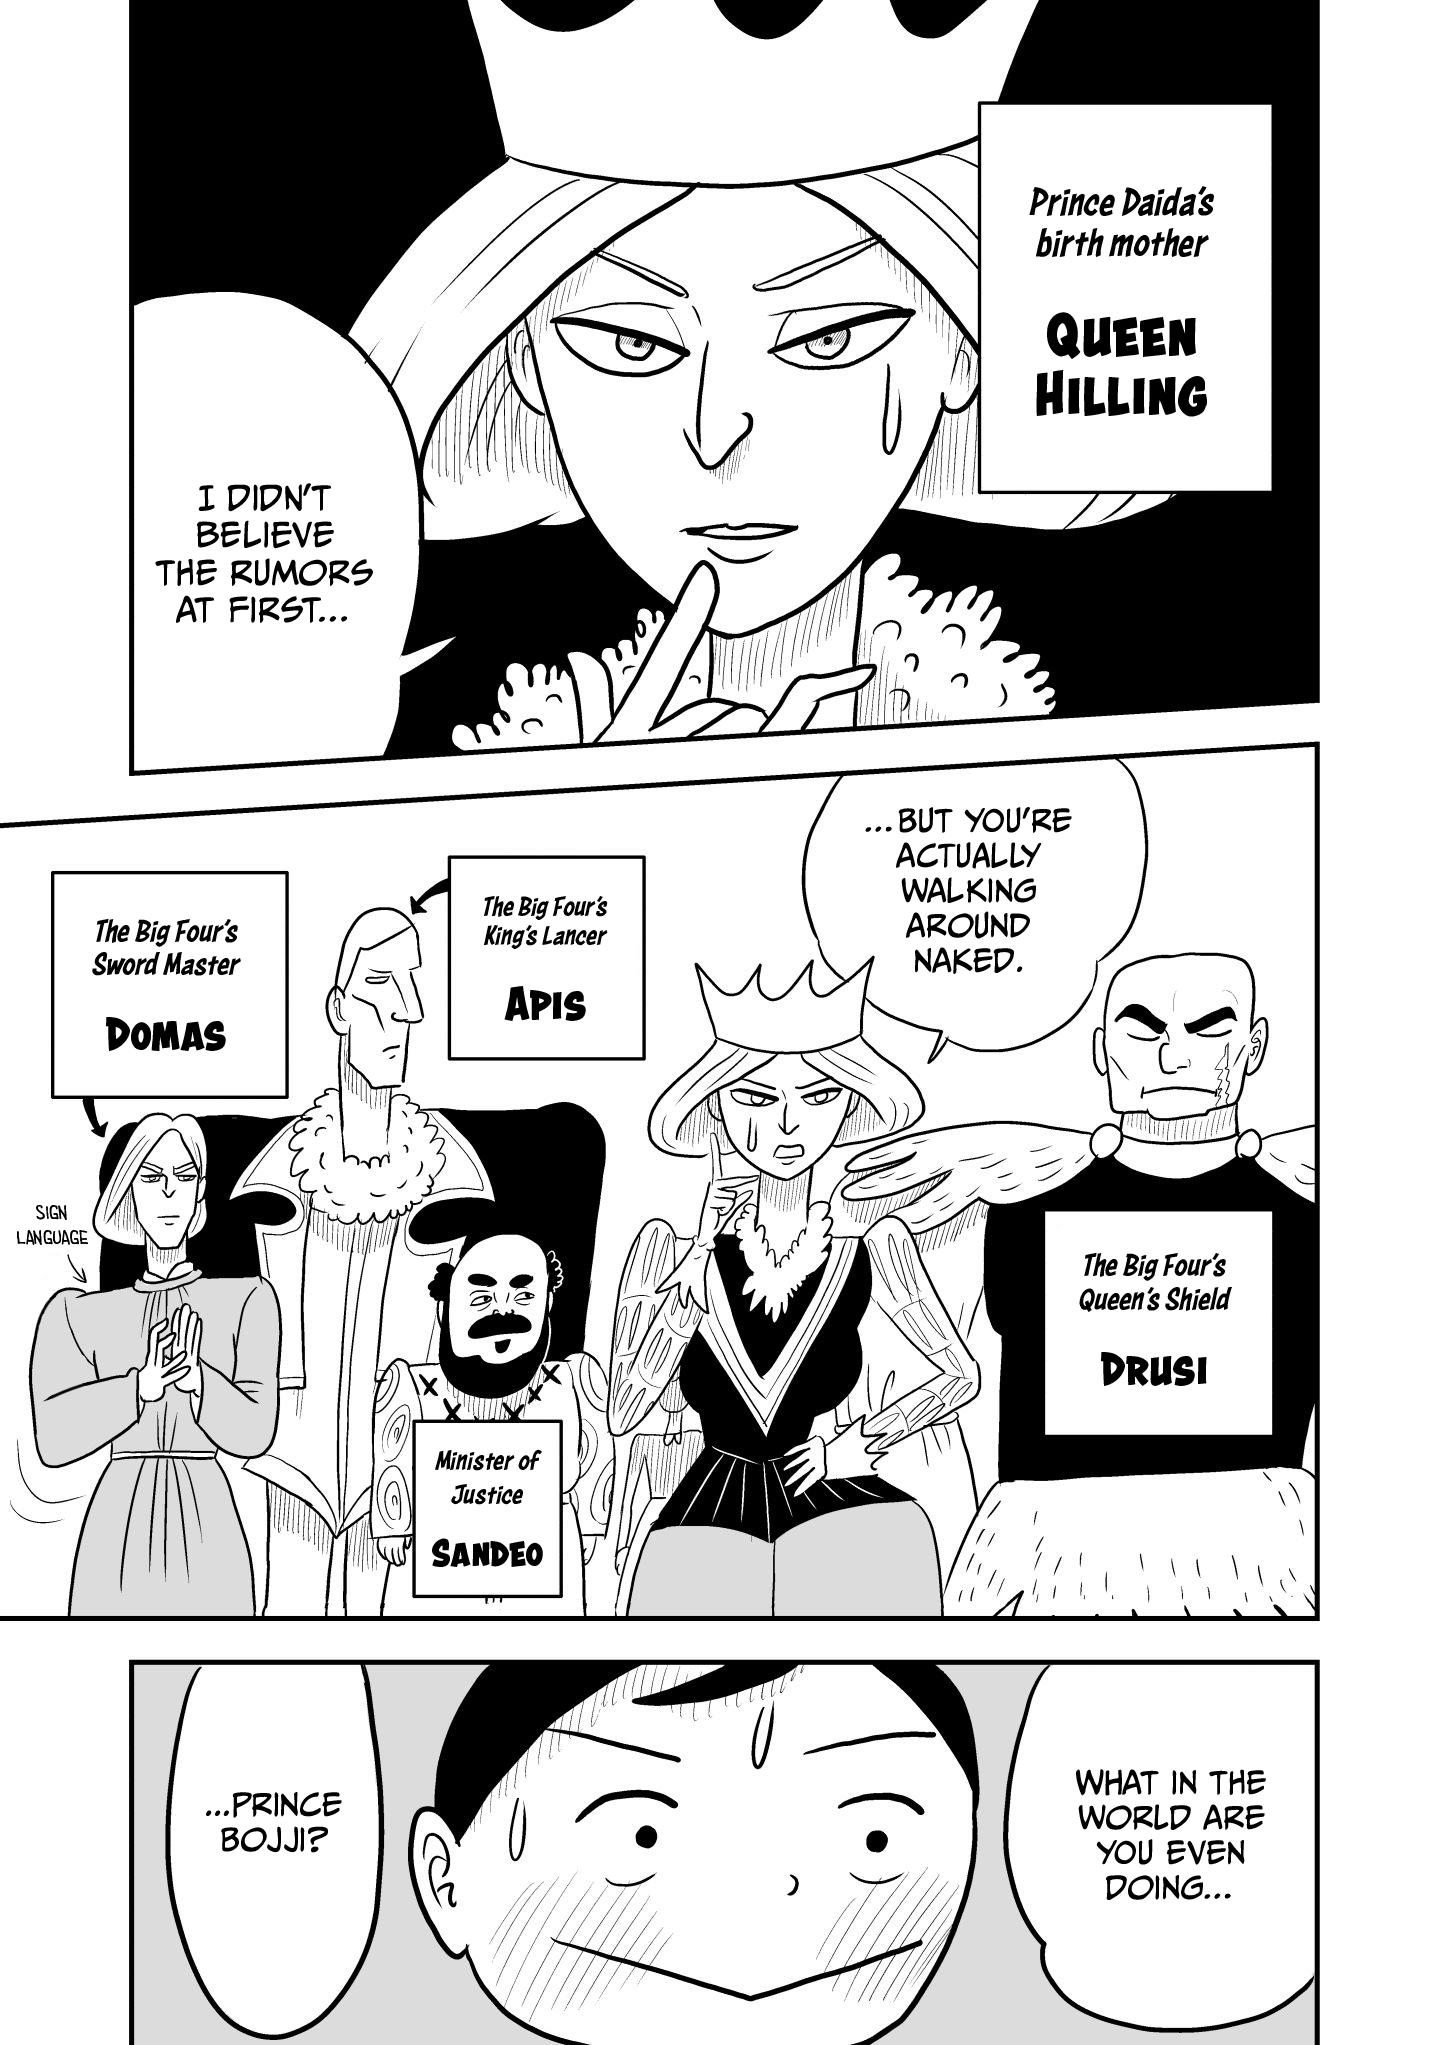 Ranking of Kings, Chapter 170 - Ranking of Kings Manga Online